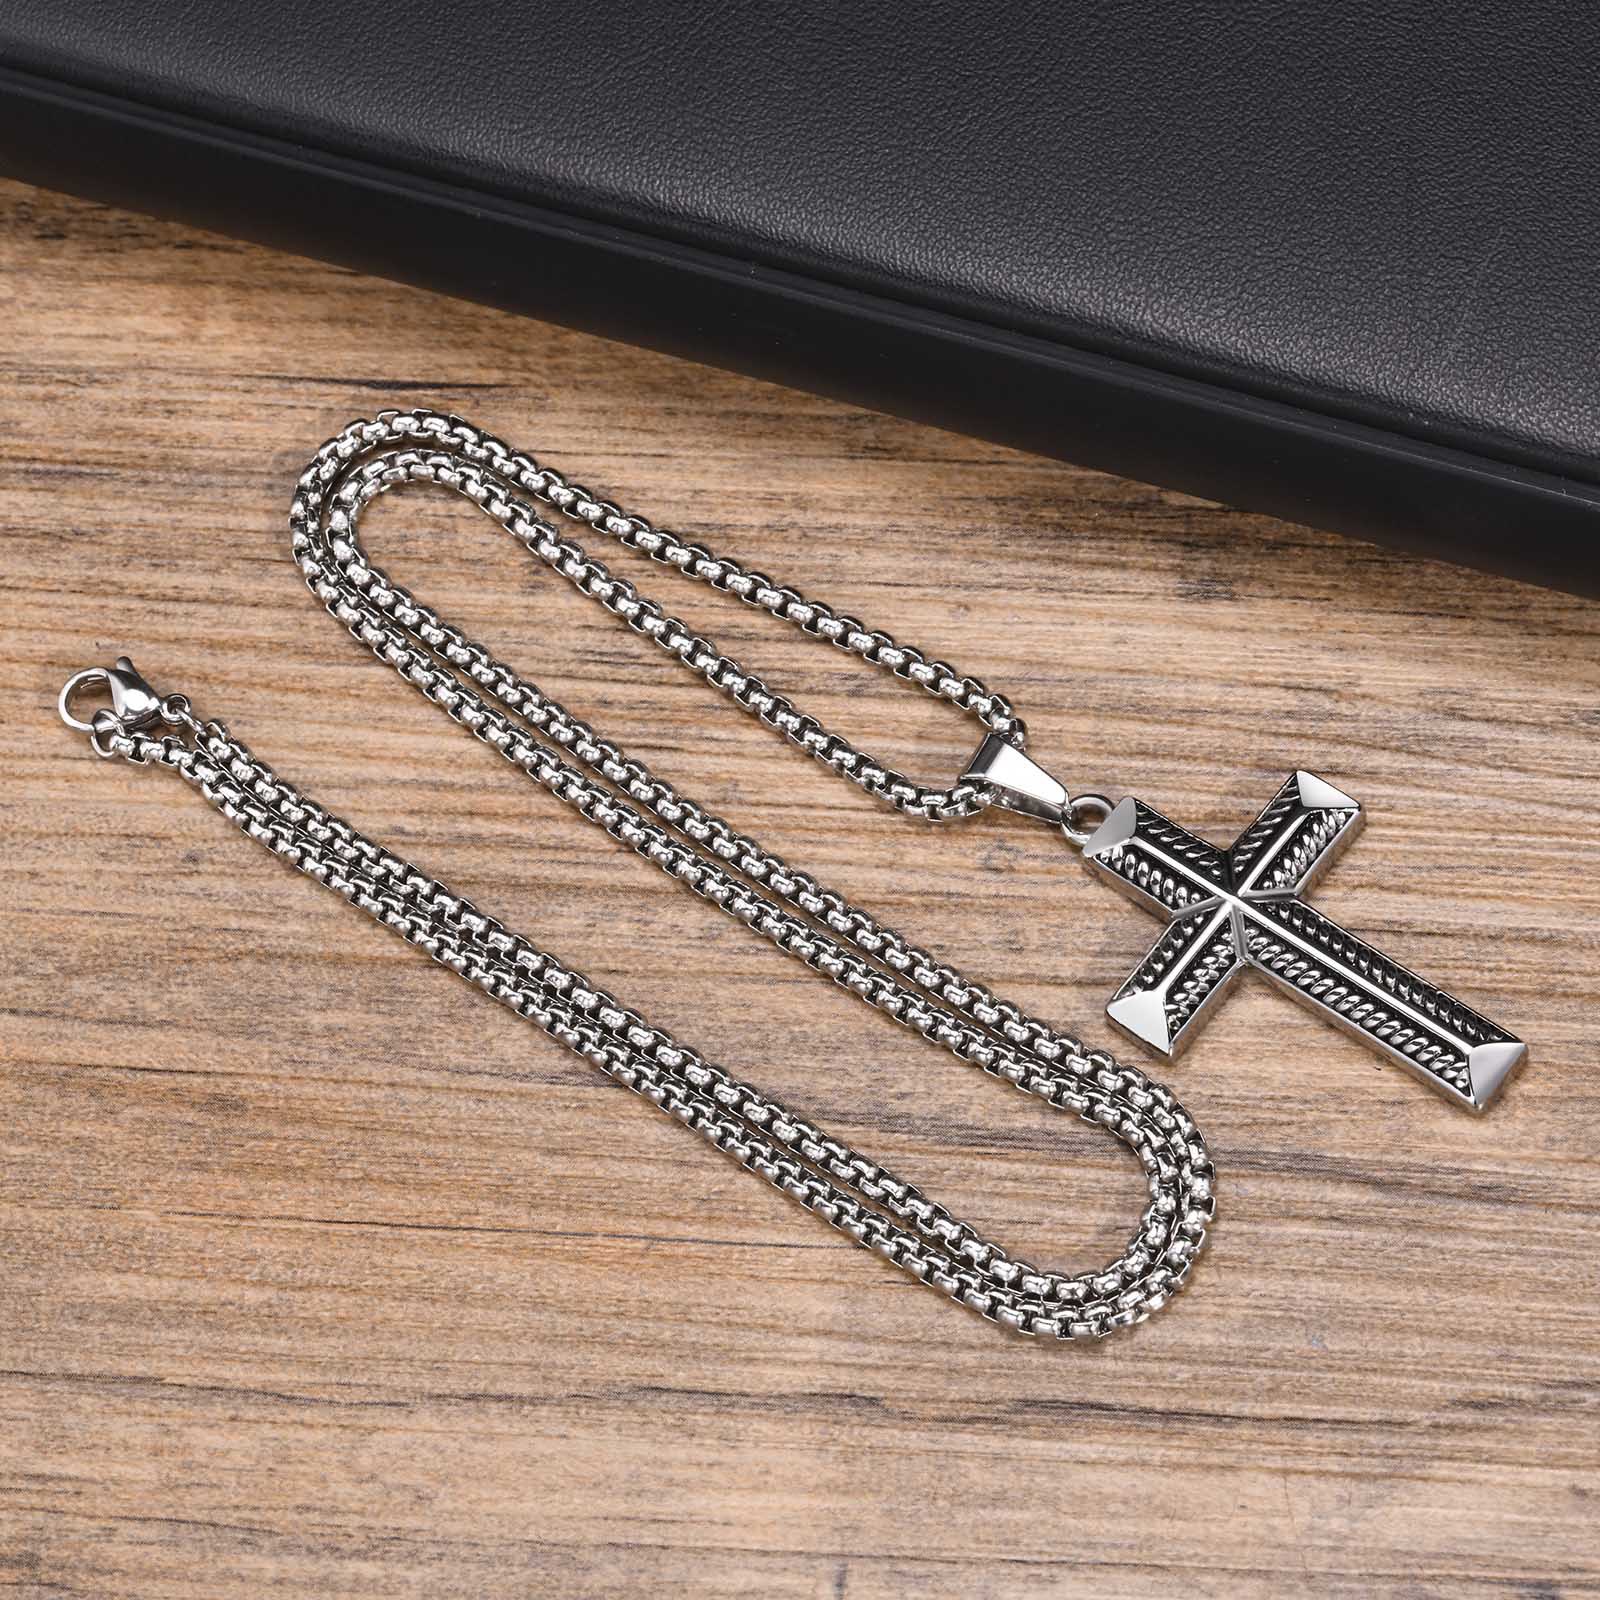 2:Steel pendant   chain